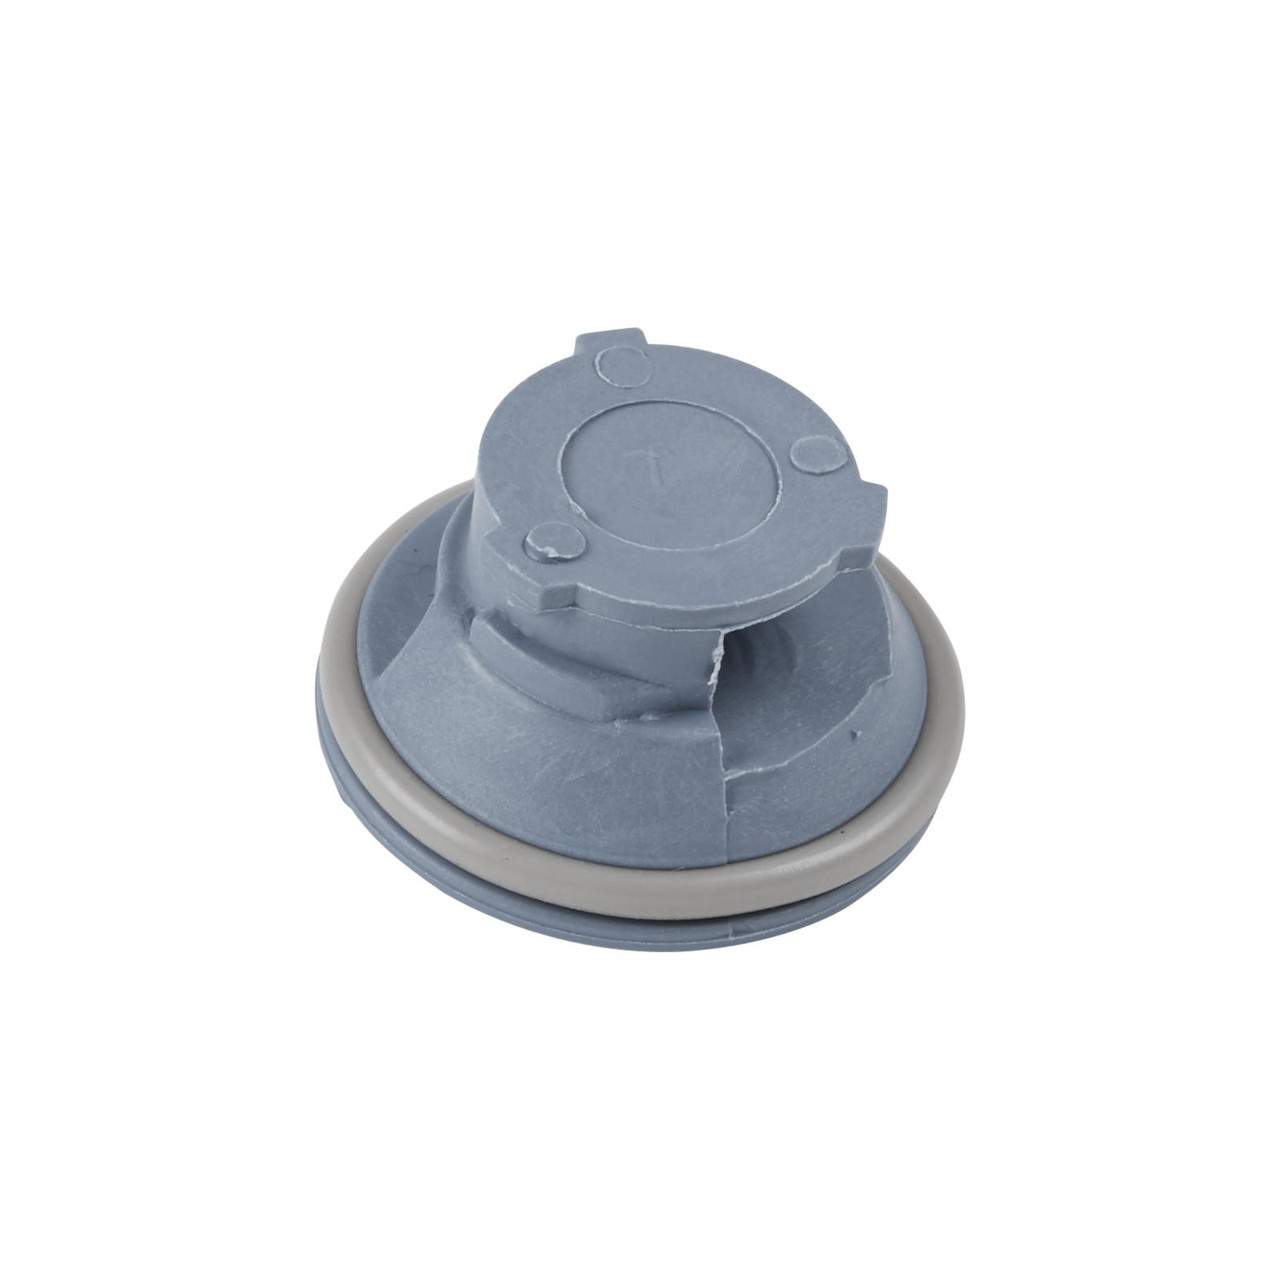 Whirlpool WP8558307 - Dishwasher Rinse Aid Cap